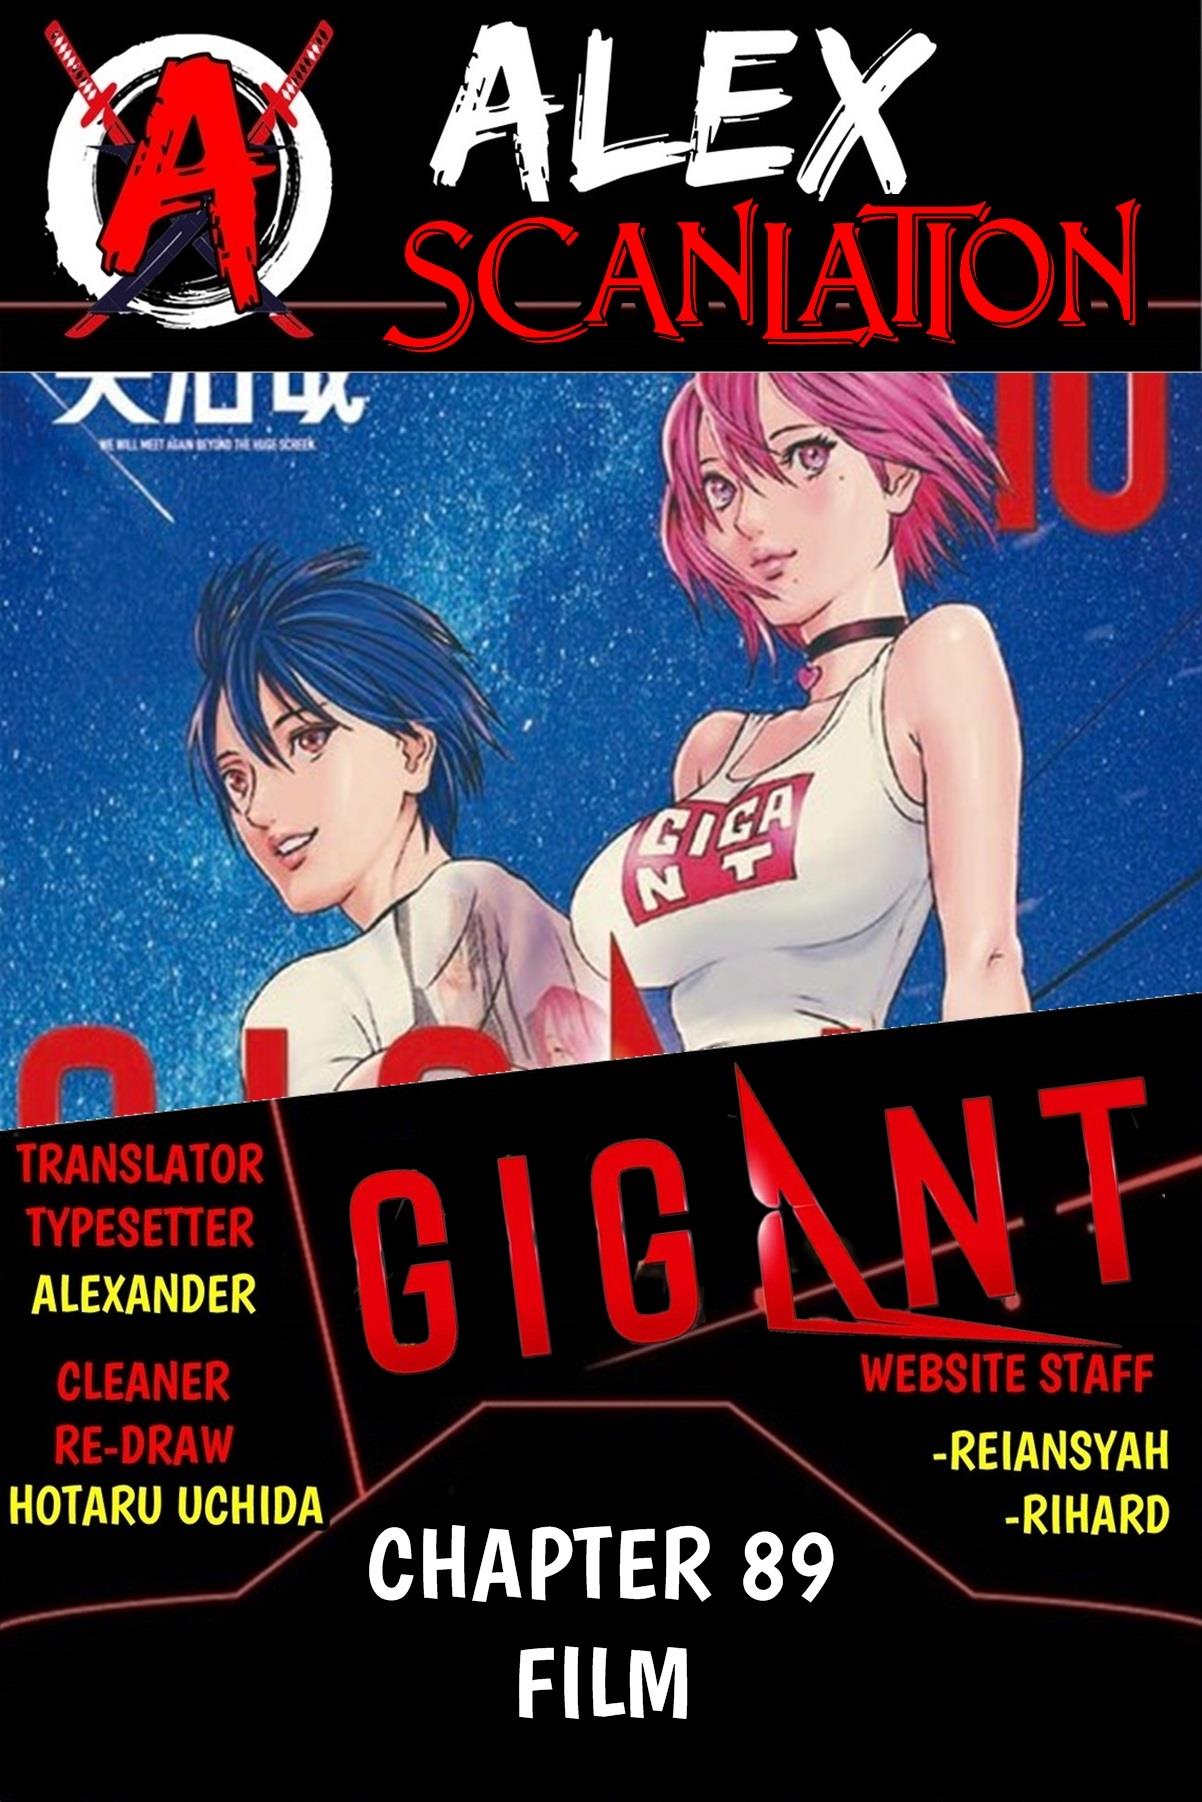 GIGANT Chapter 89 End